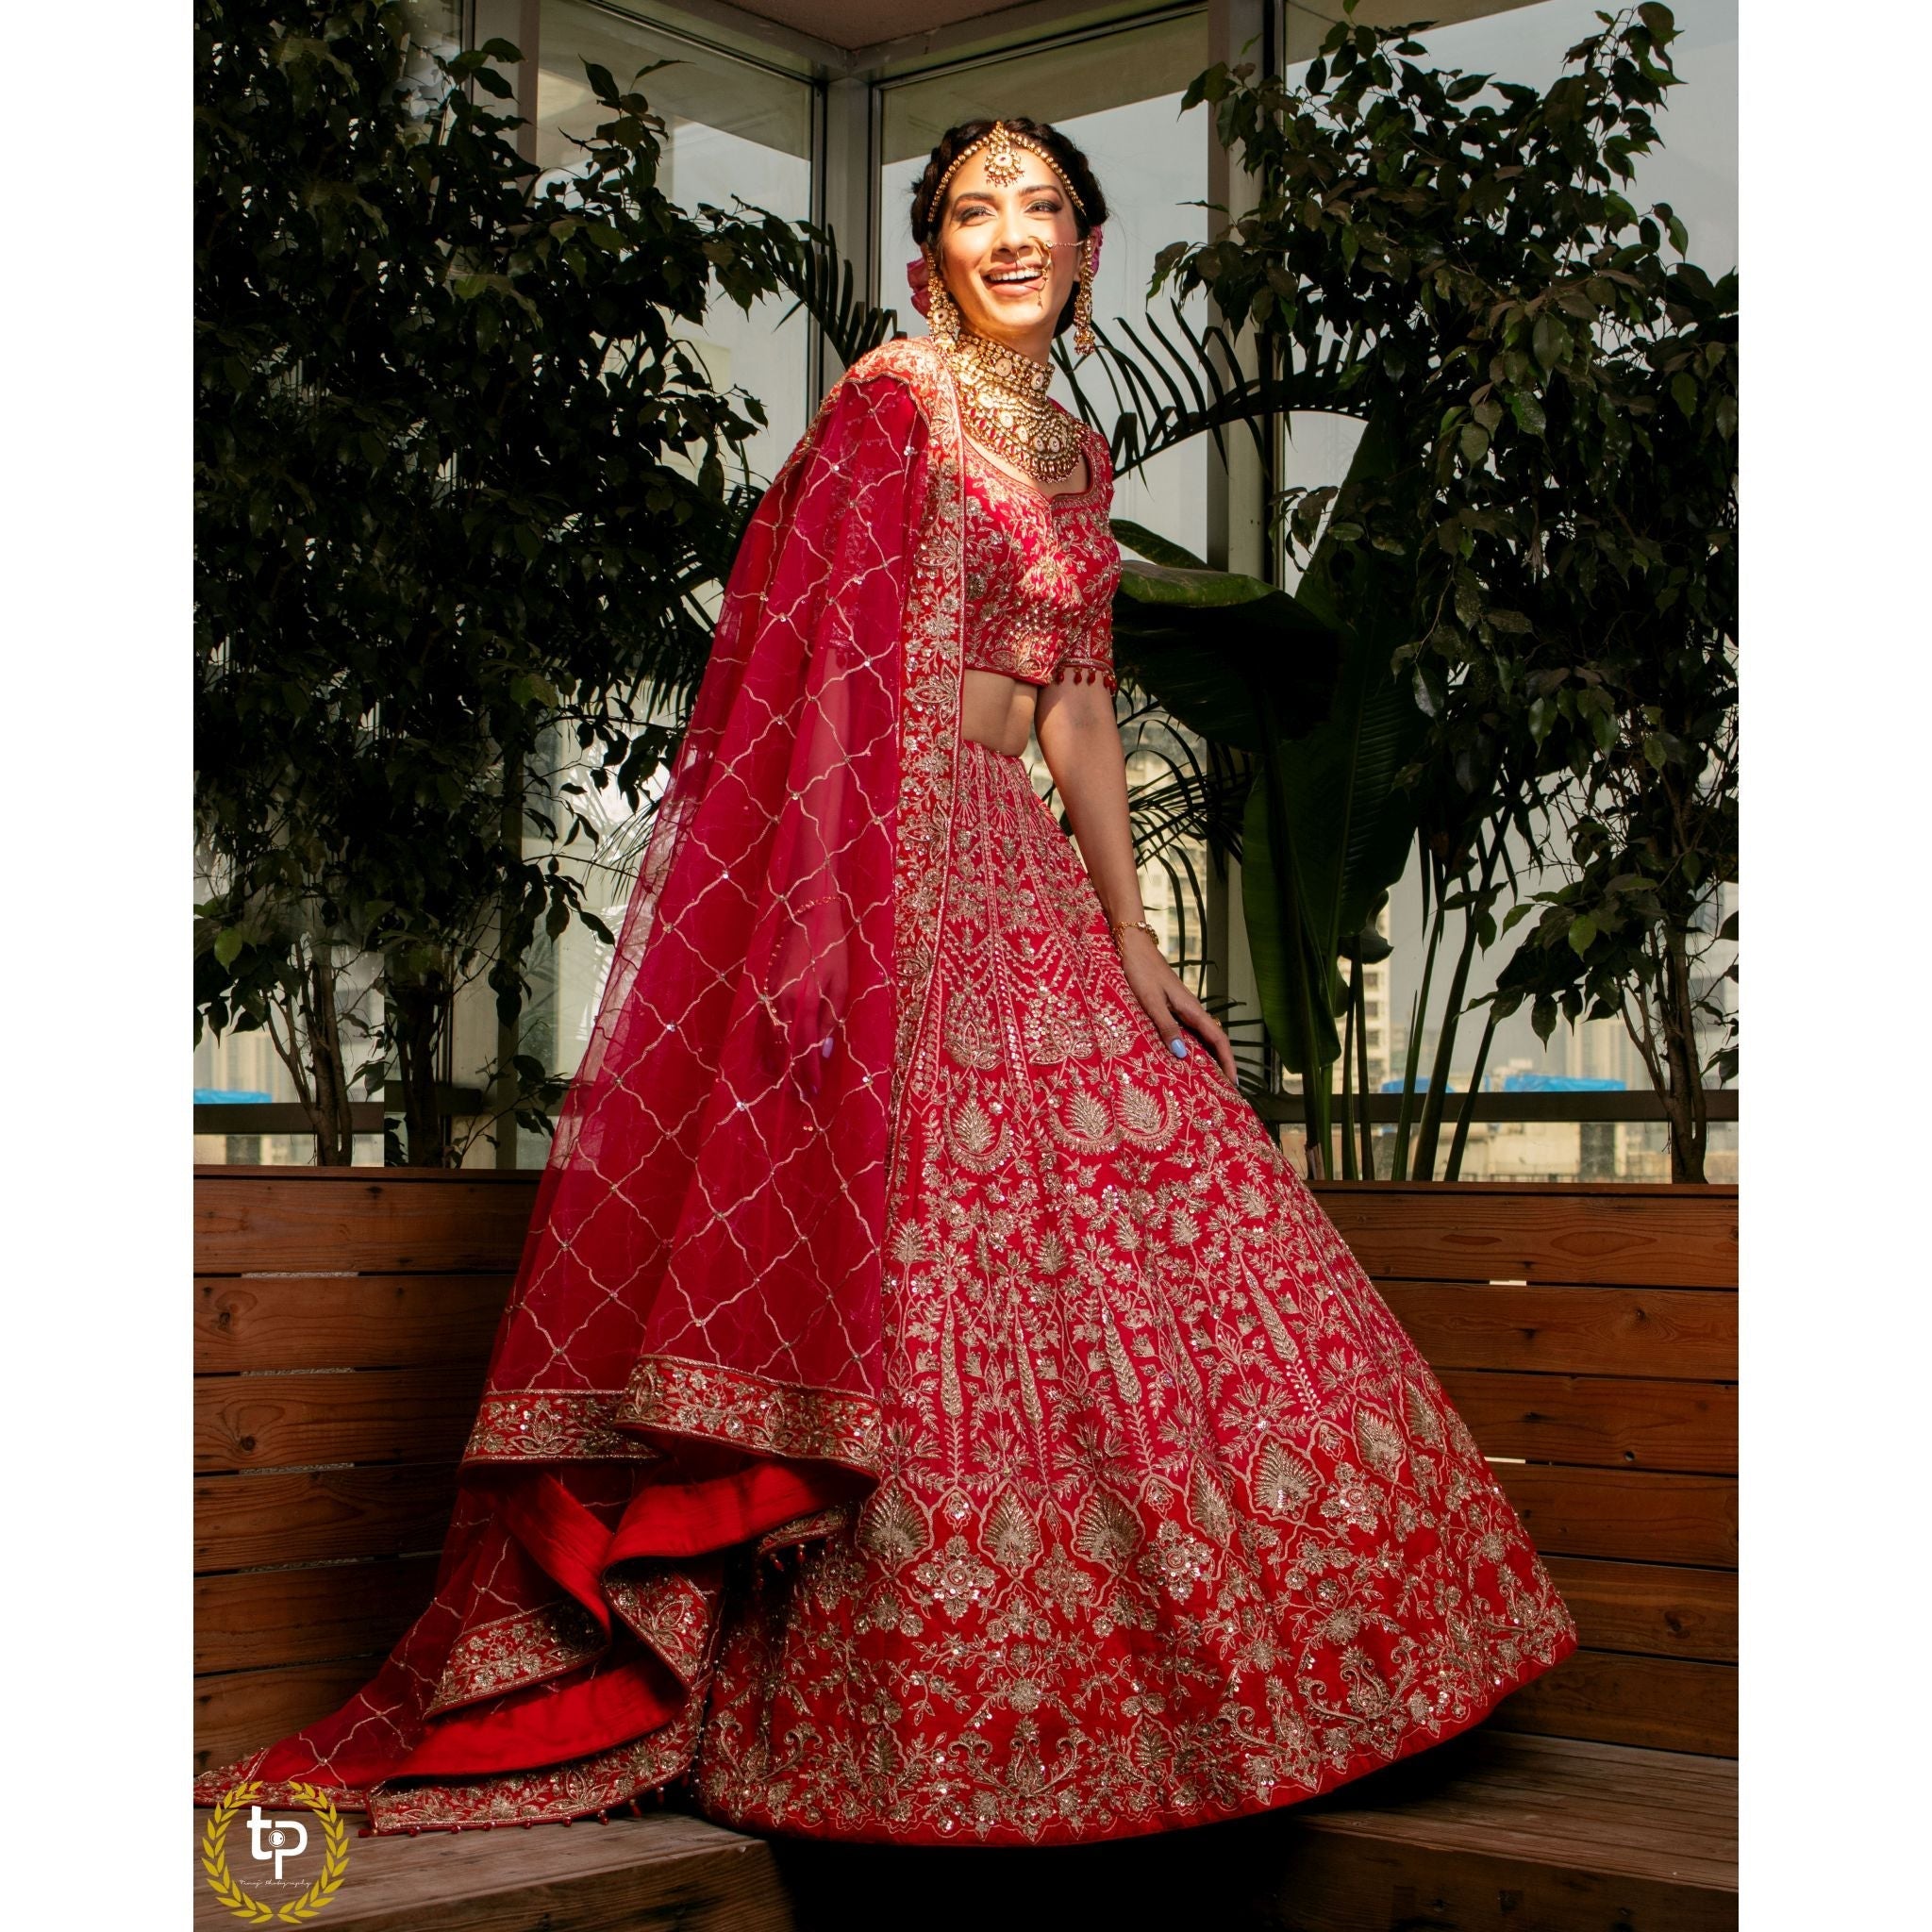 Cerise Pink And Red Lehenga Set - Indian Designer Bridal Wedding Outfit